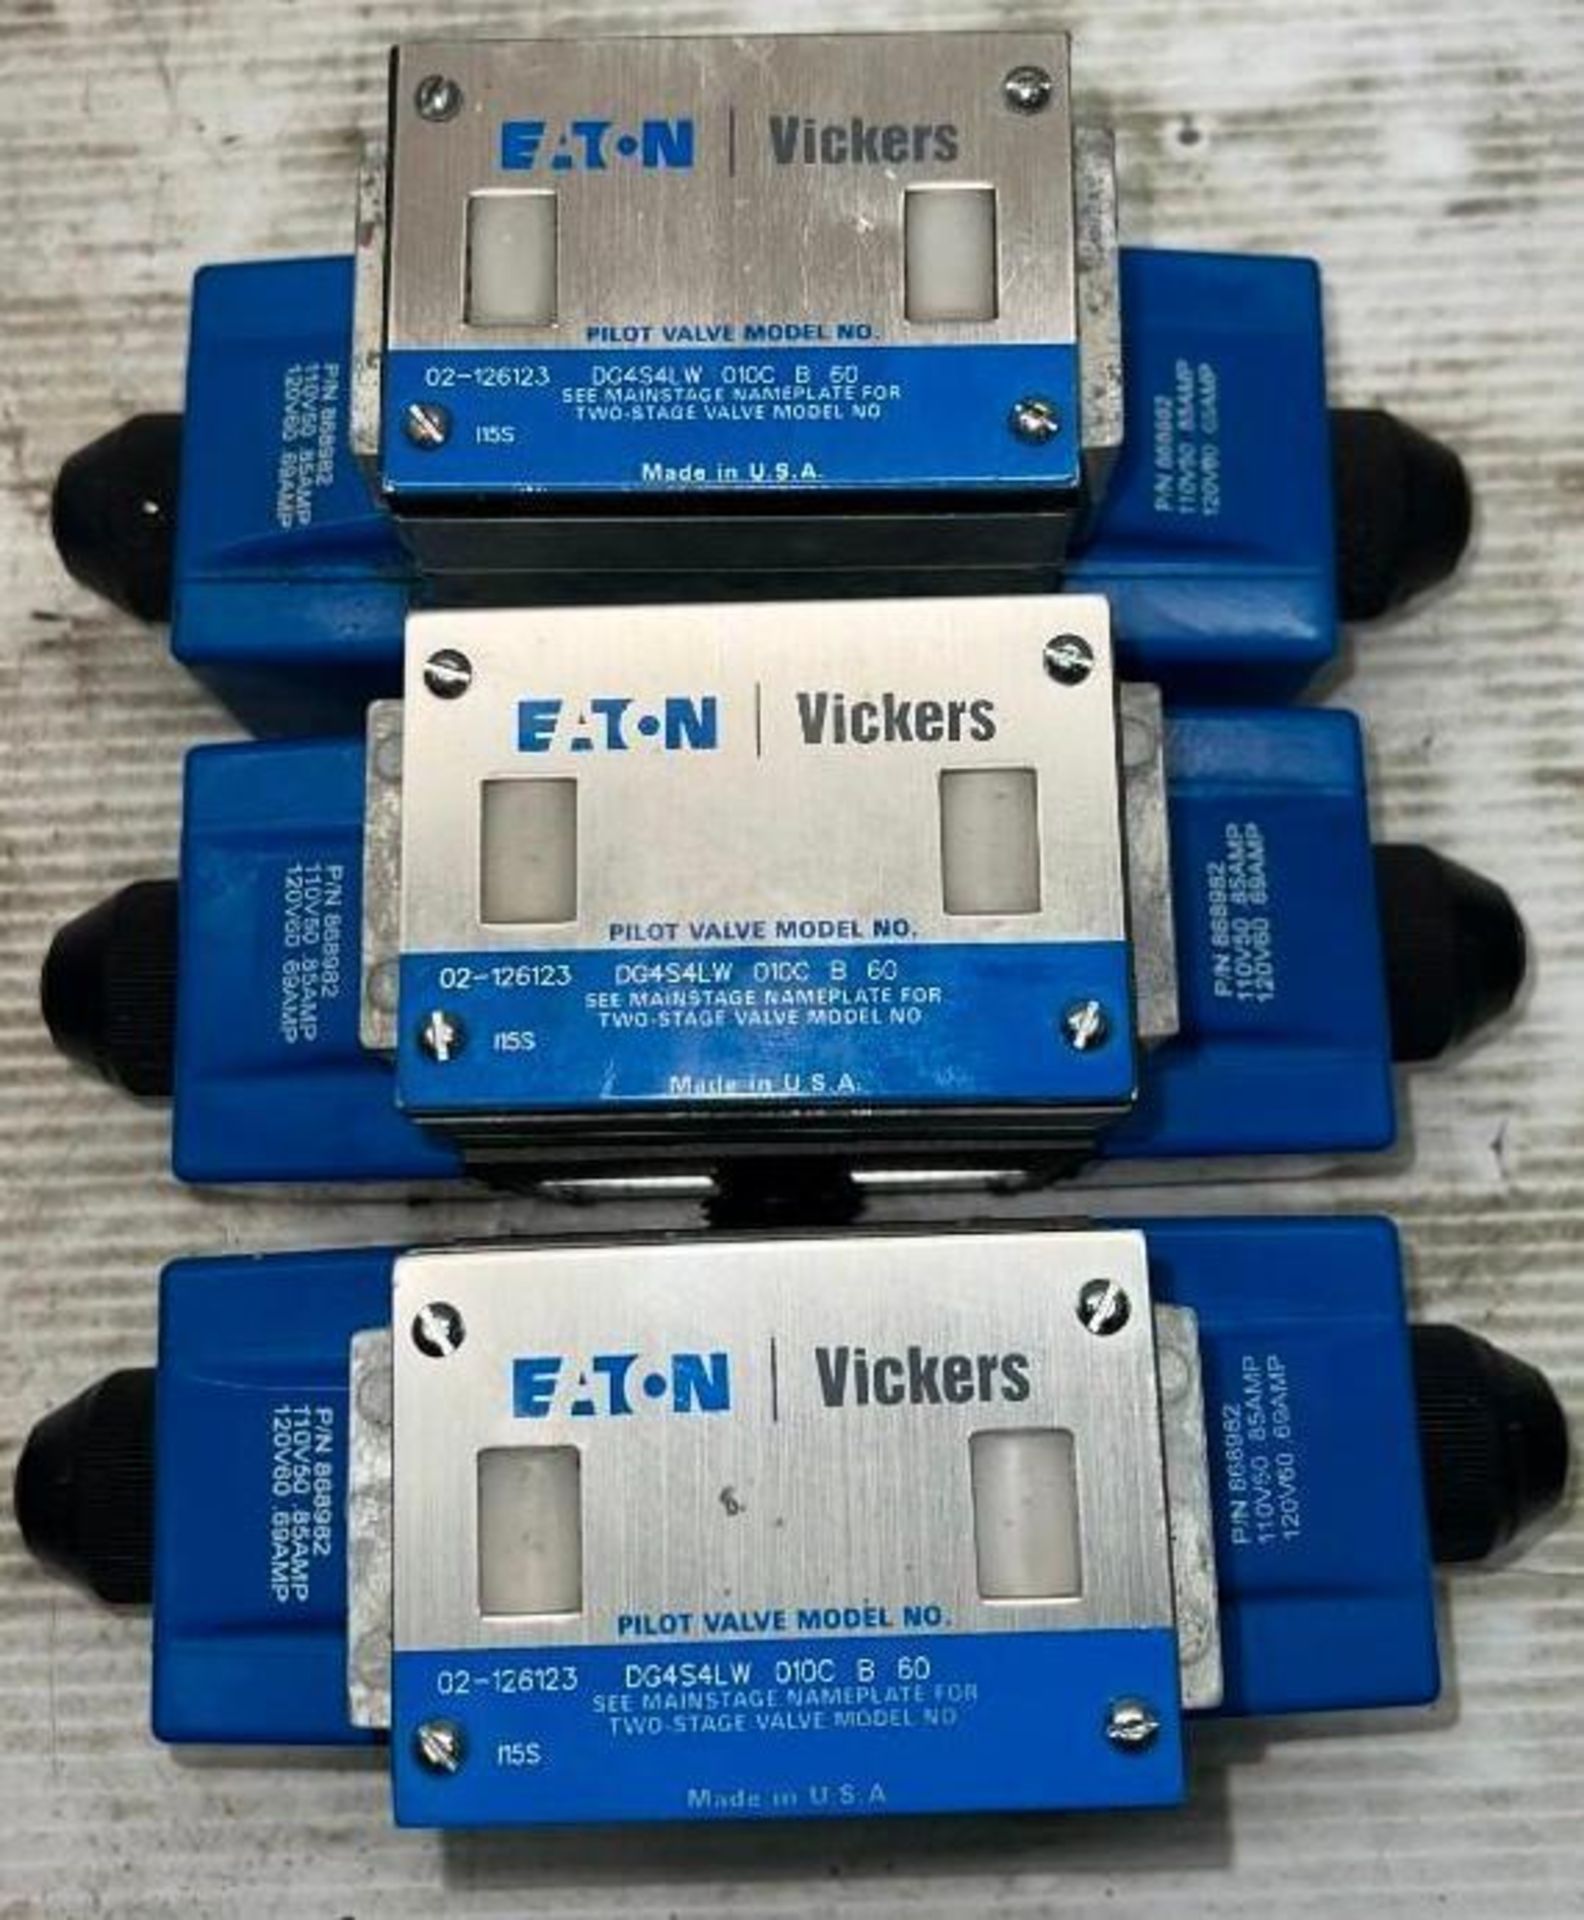 Lot of (3) Eaton/Vickers #DG4S4LW 010C B 60 Hydraulic Valves - Image 2 of 4